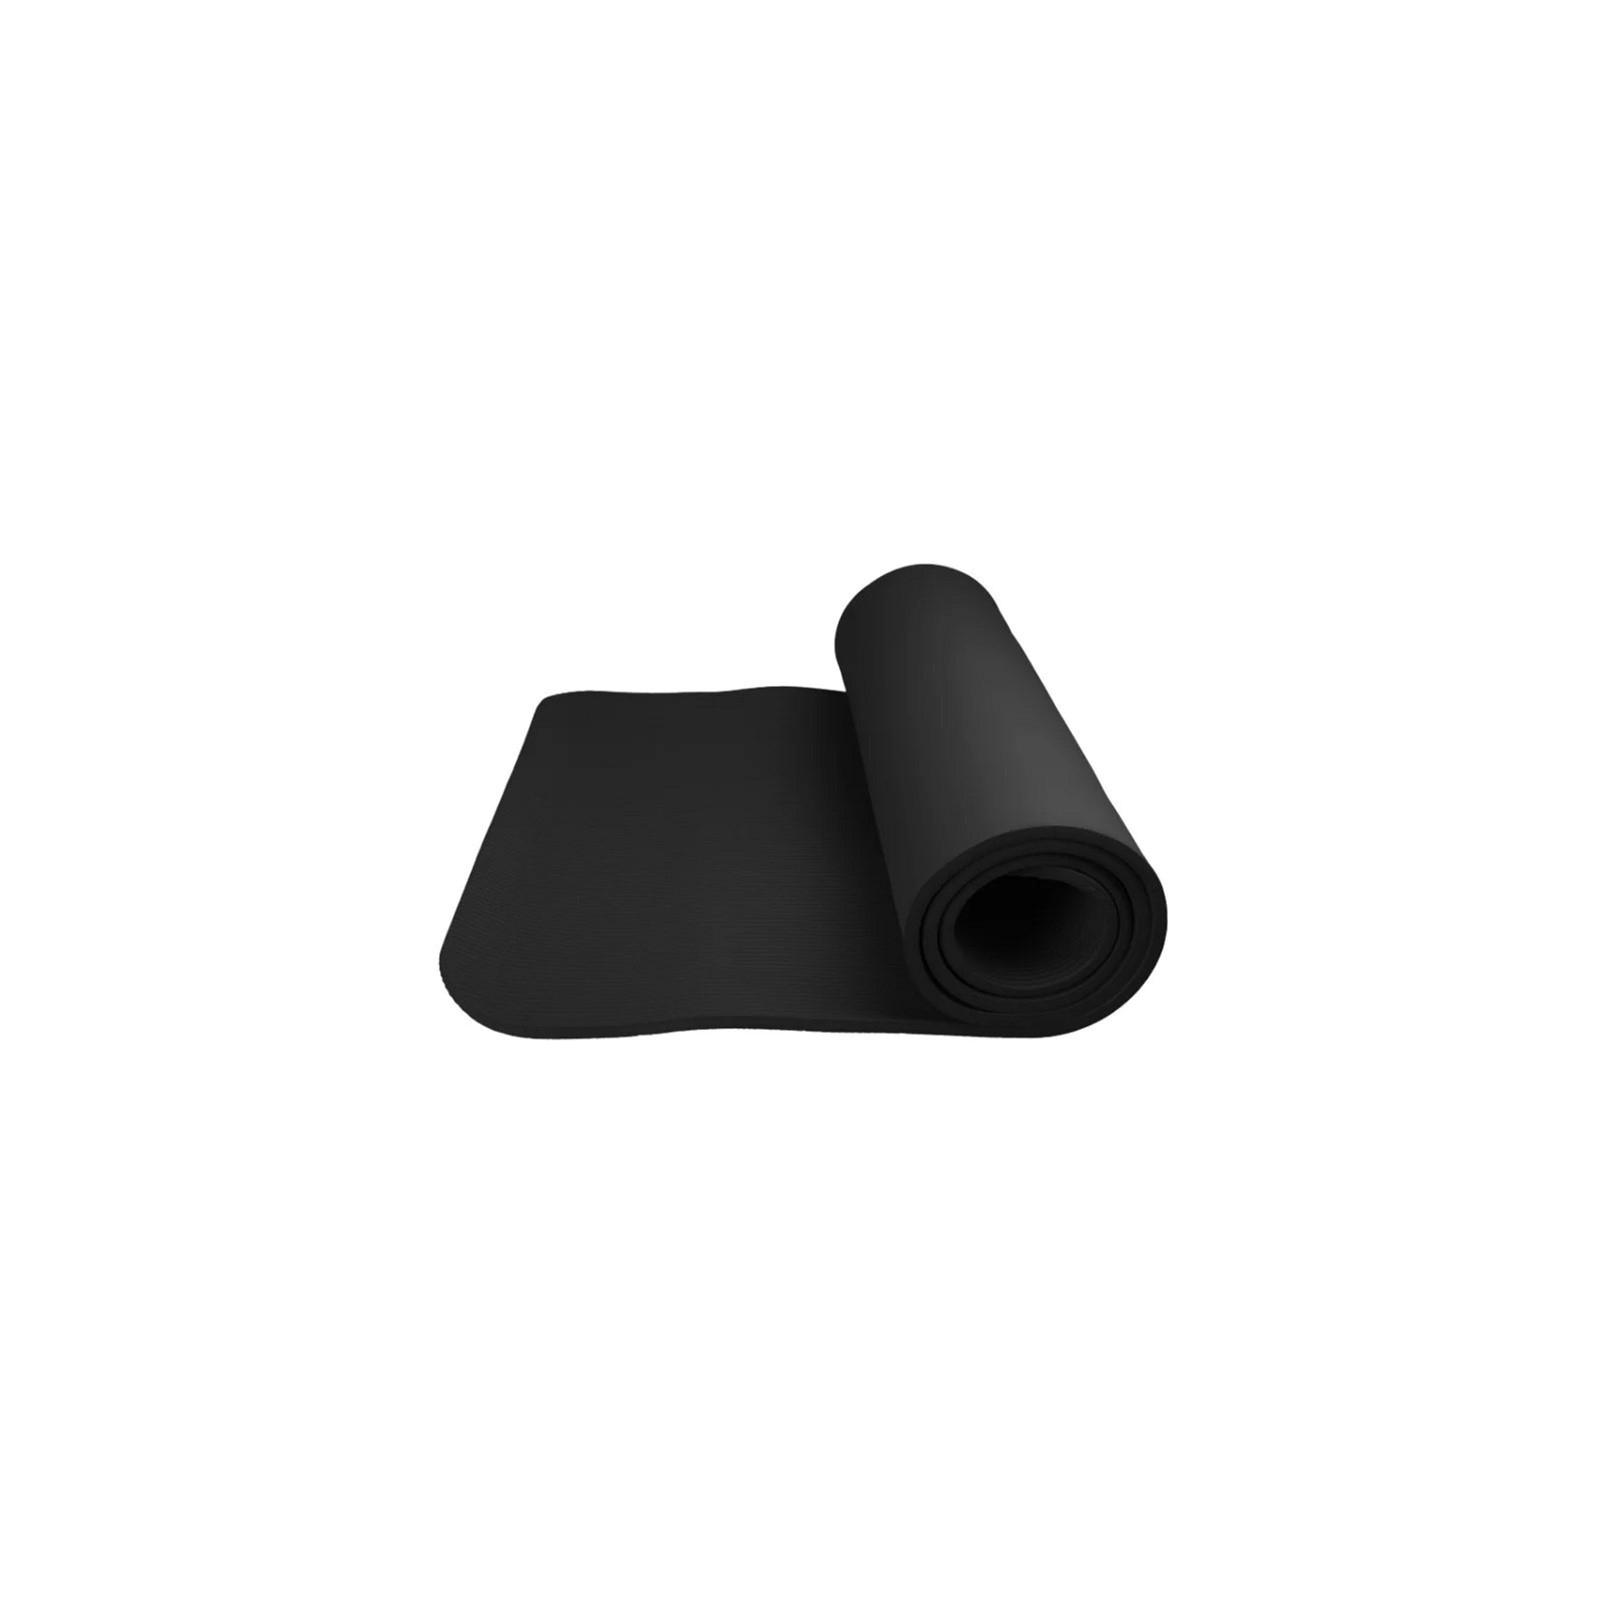 Коврик для йоги Power System PS-4017 NBR Fitness Yoga Mat Plus 180 х 61 х 1 см Black (PS-4017_Black) изображение 2